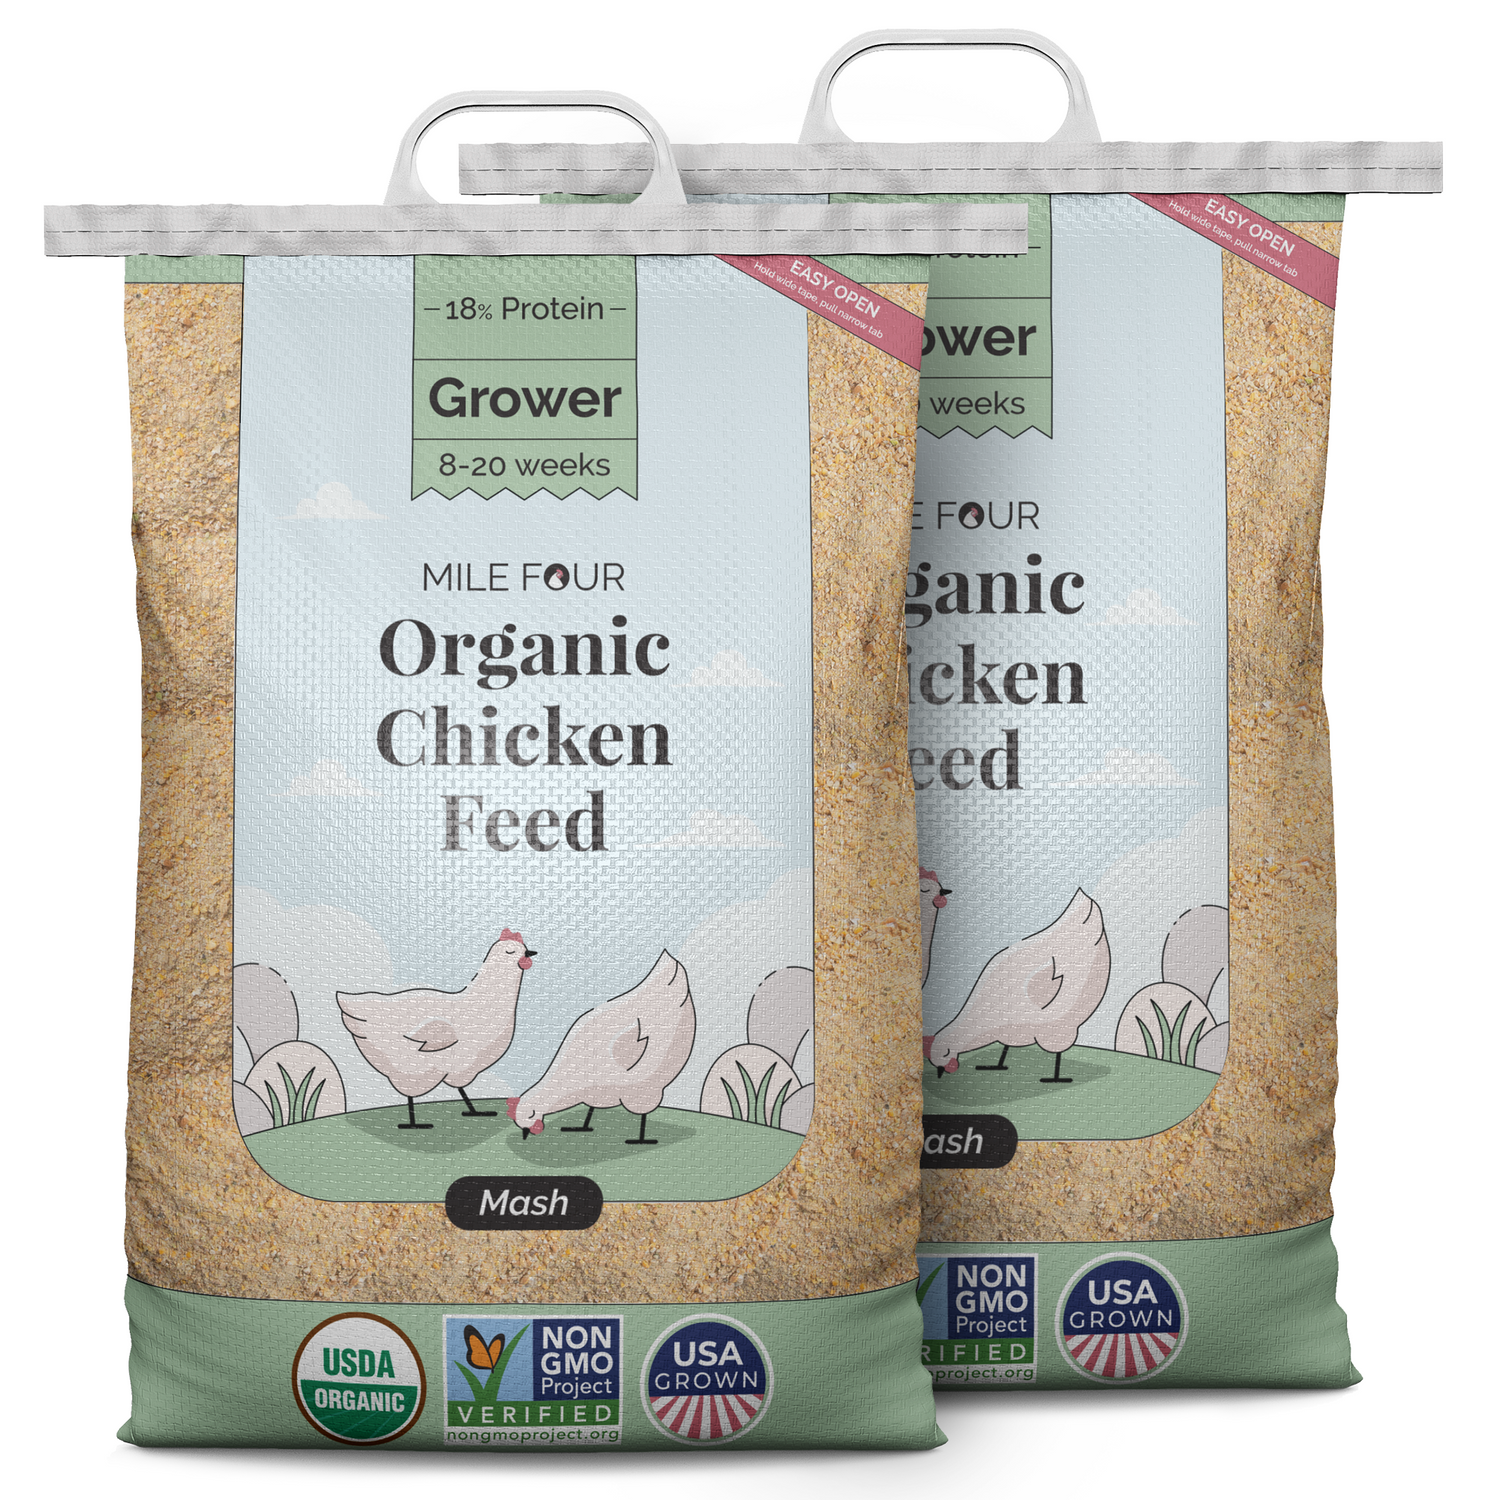 Buy Organic Grower Chicken Feed | Best Organic Grower Feed | Non-GMO 